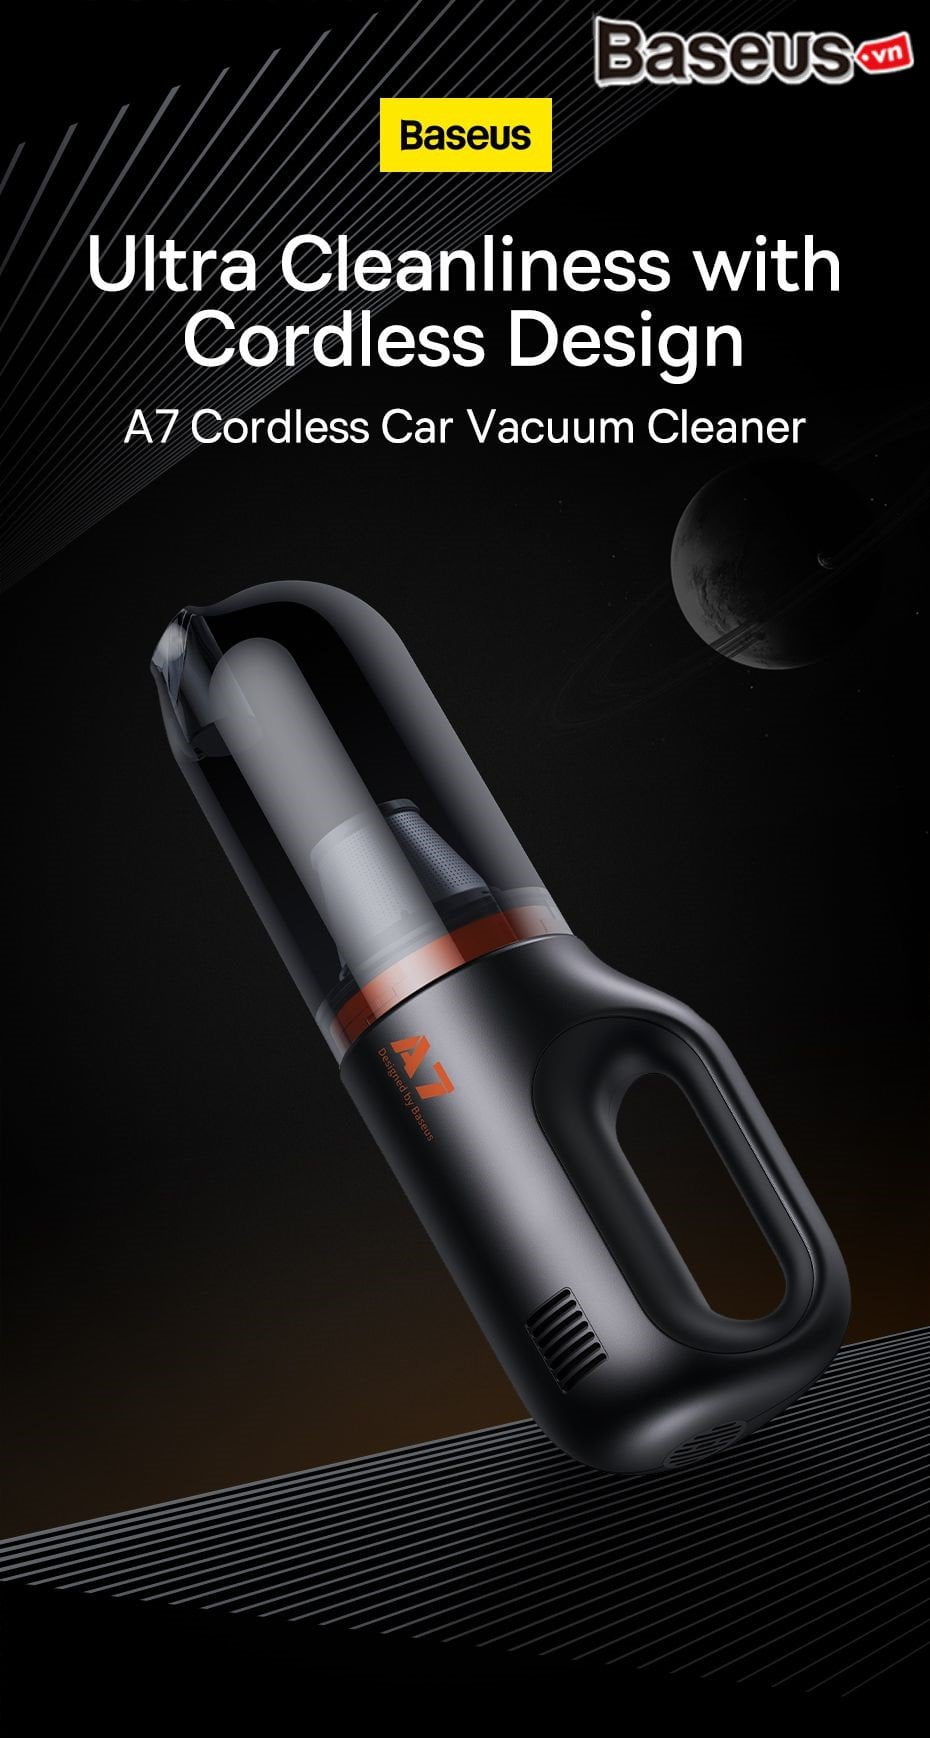 baseus a7 cordless car vacuum cleaner 001 357630f54f4b4e89b945589126490c21